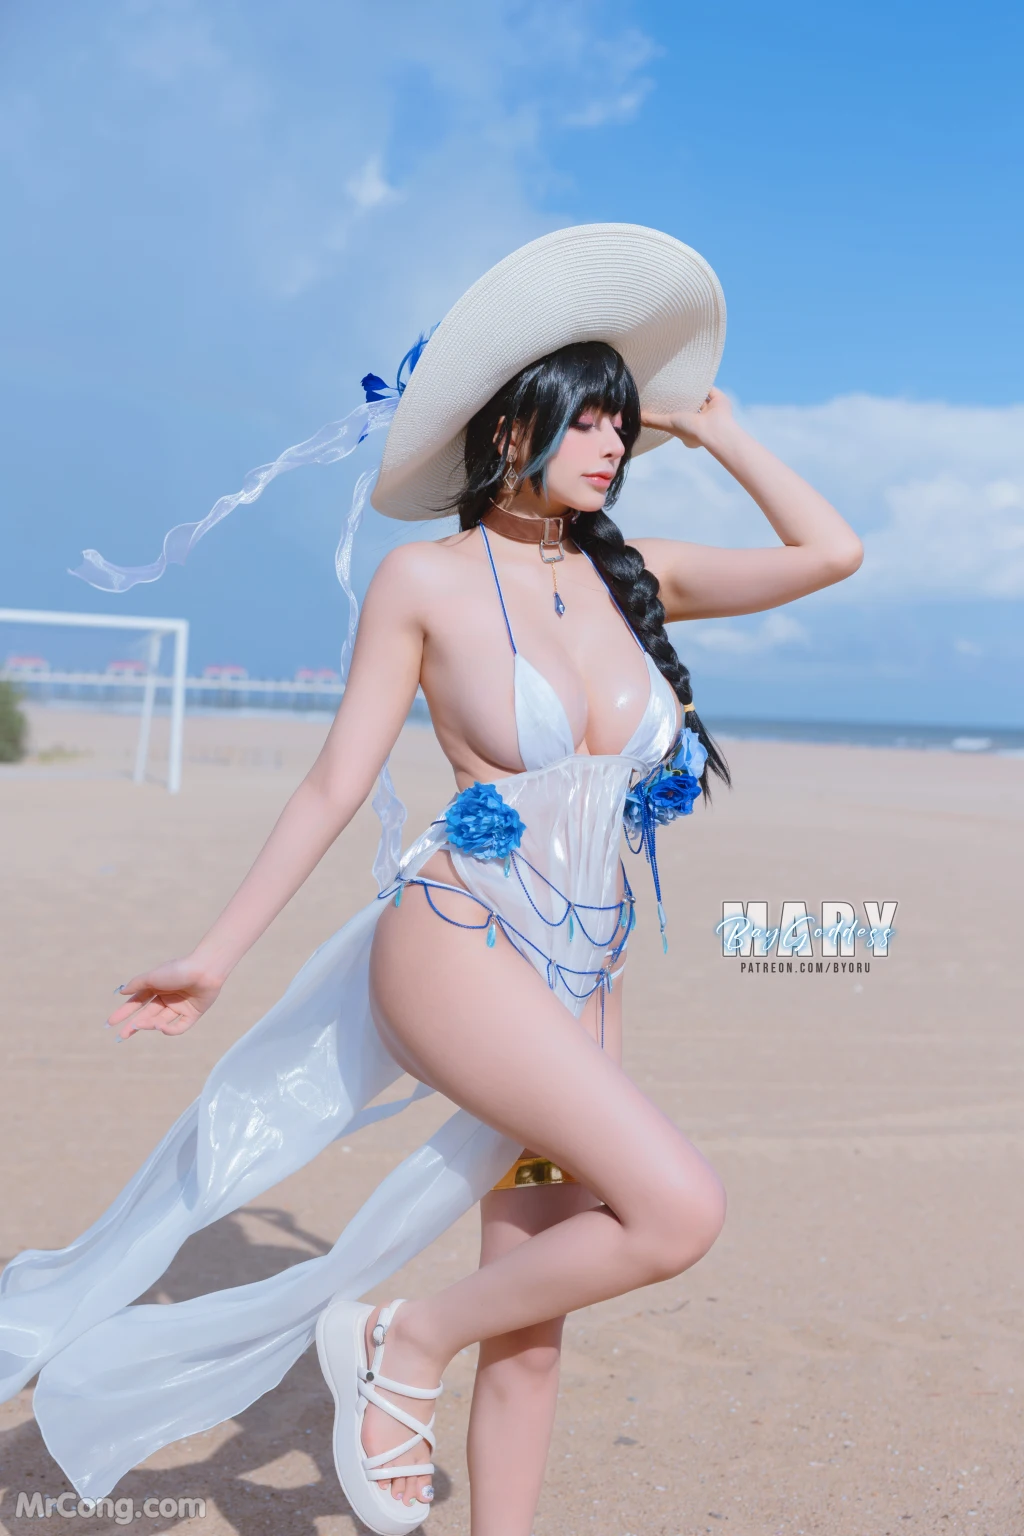 Coser@Byoru: Mary Bay Goddess (52 photos)